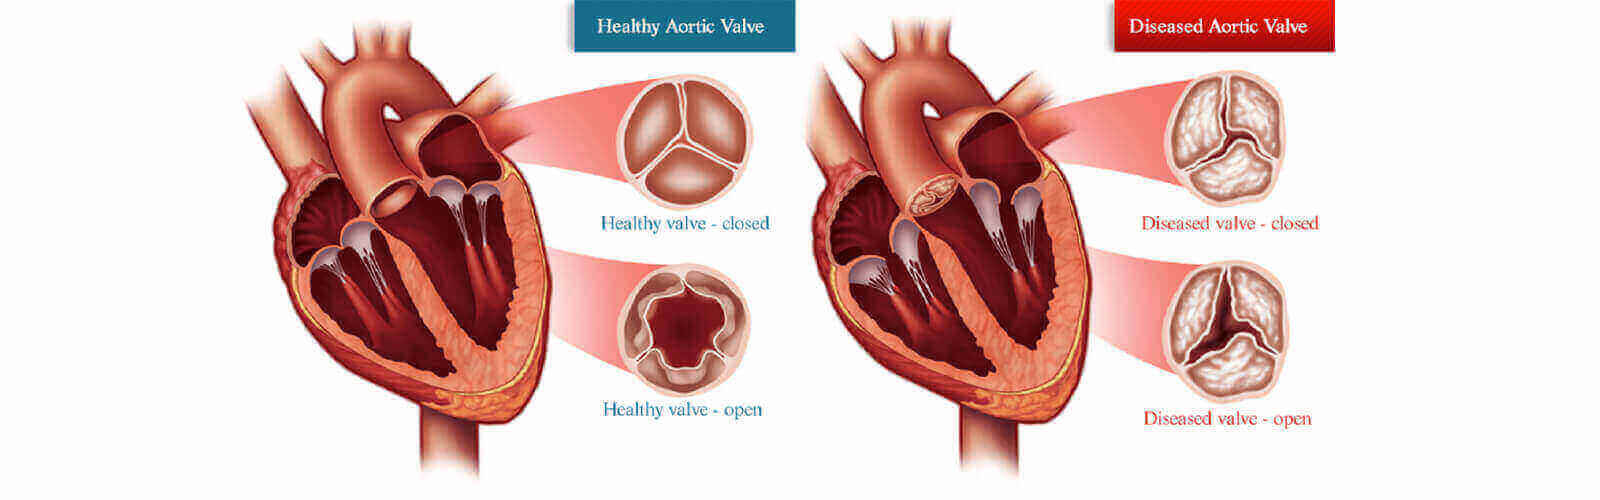 Heart Valve Replacement Surgery in Yemen